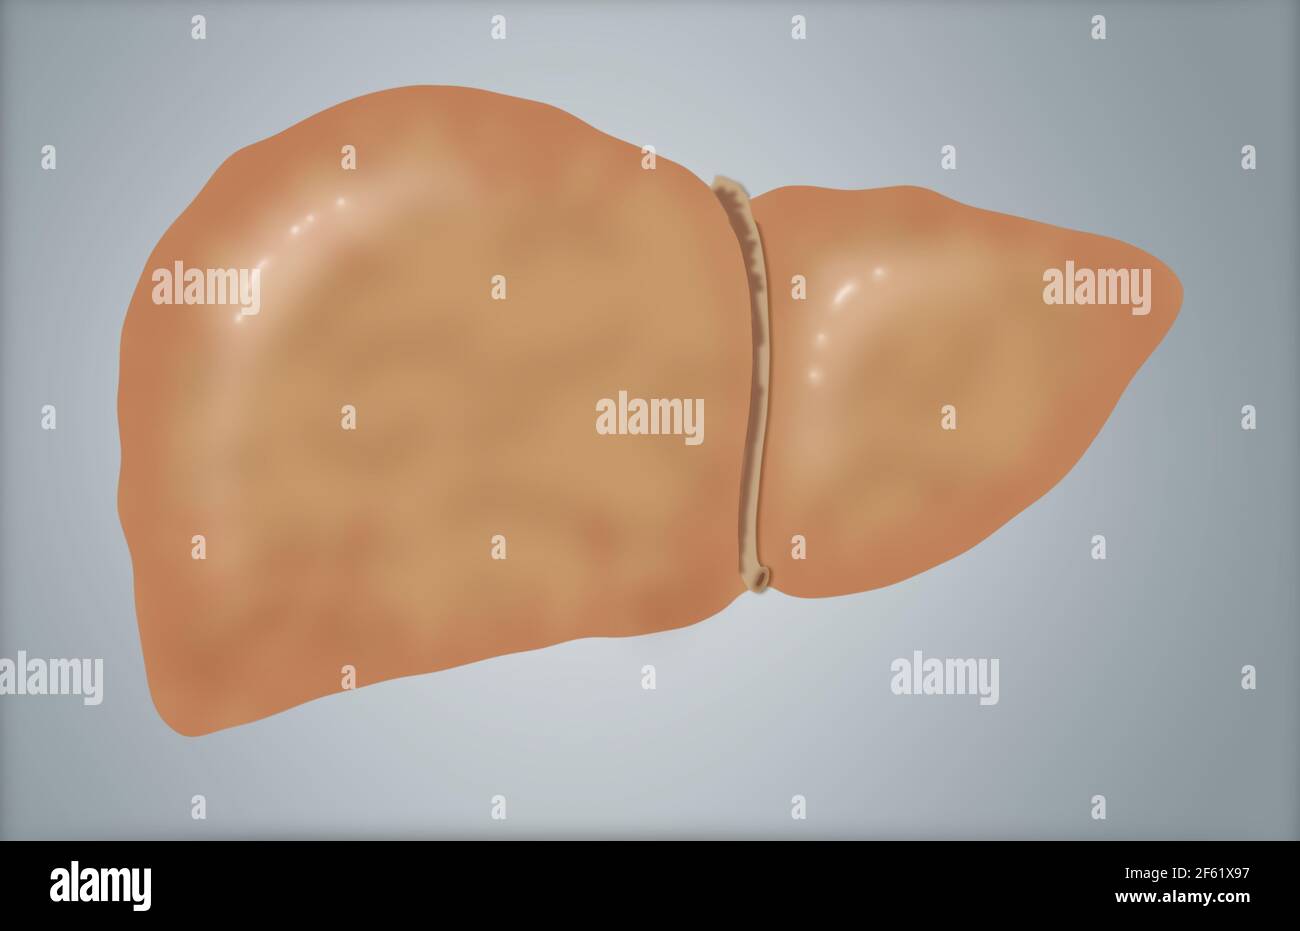 Illustration of Fatty Liver Stock Photo